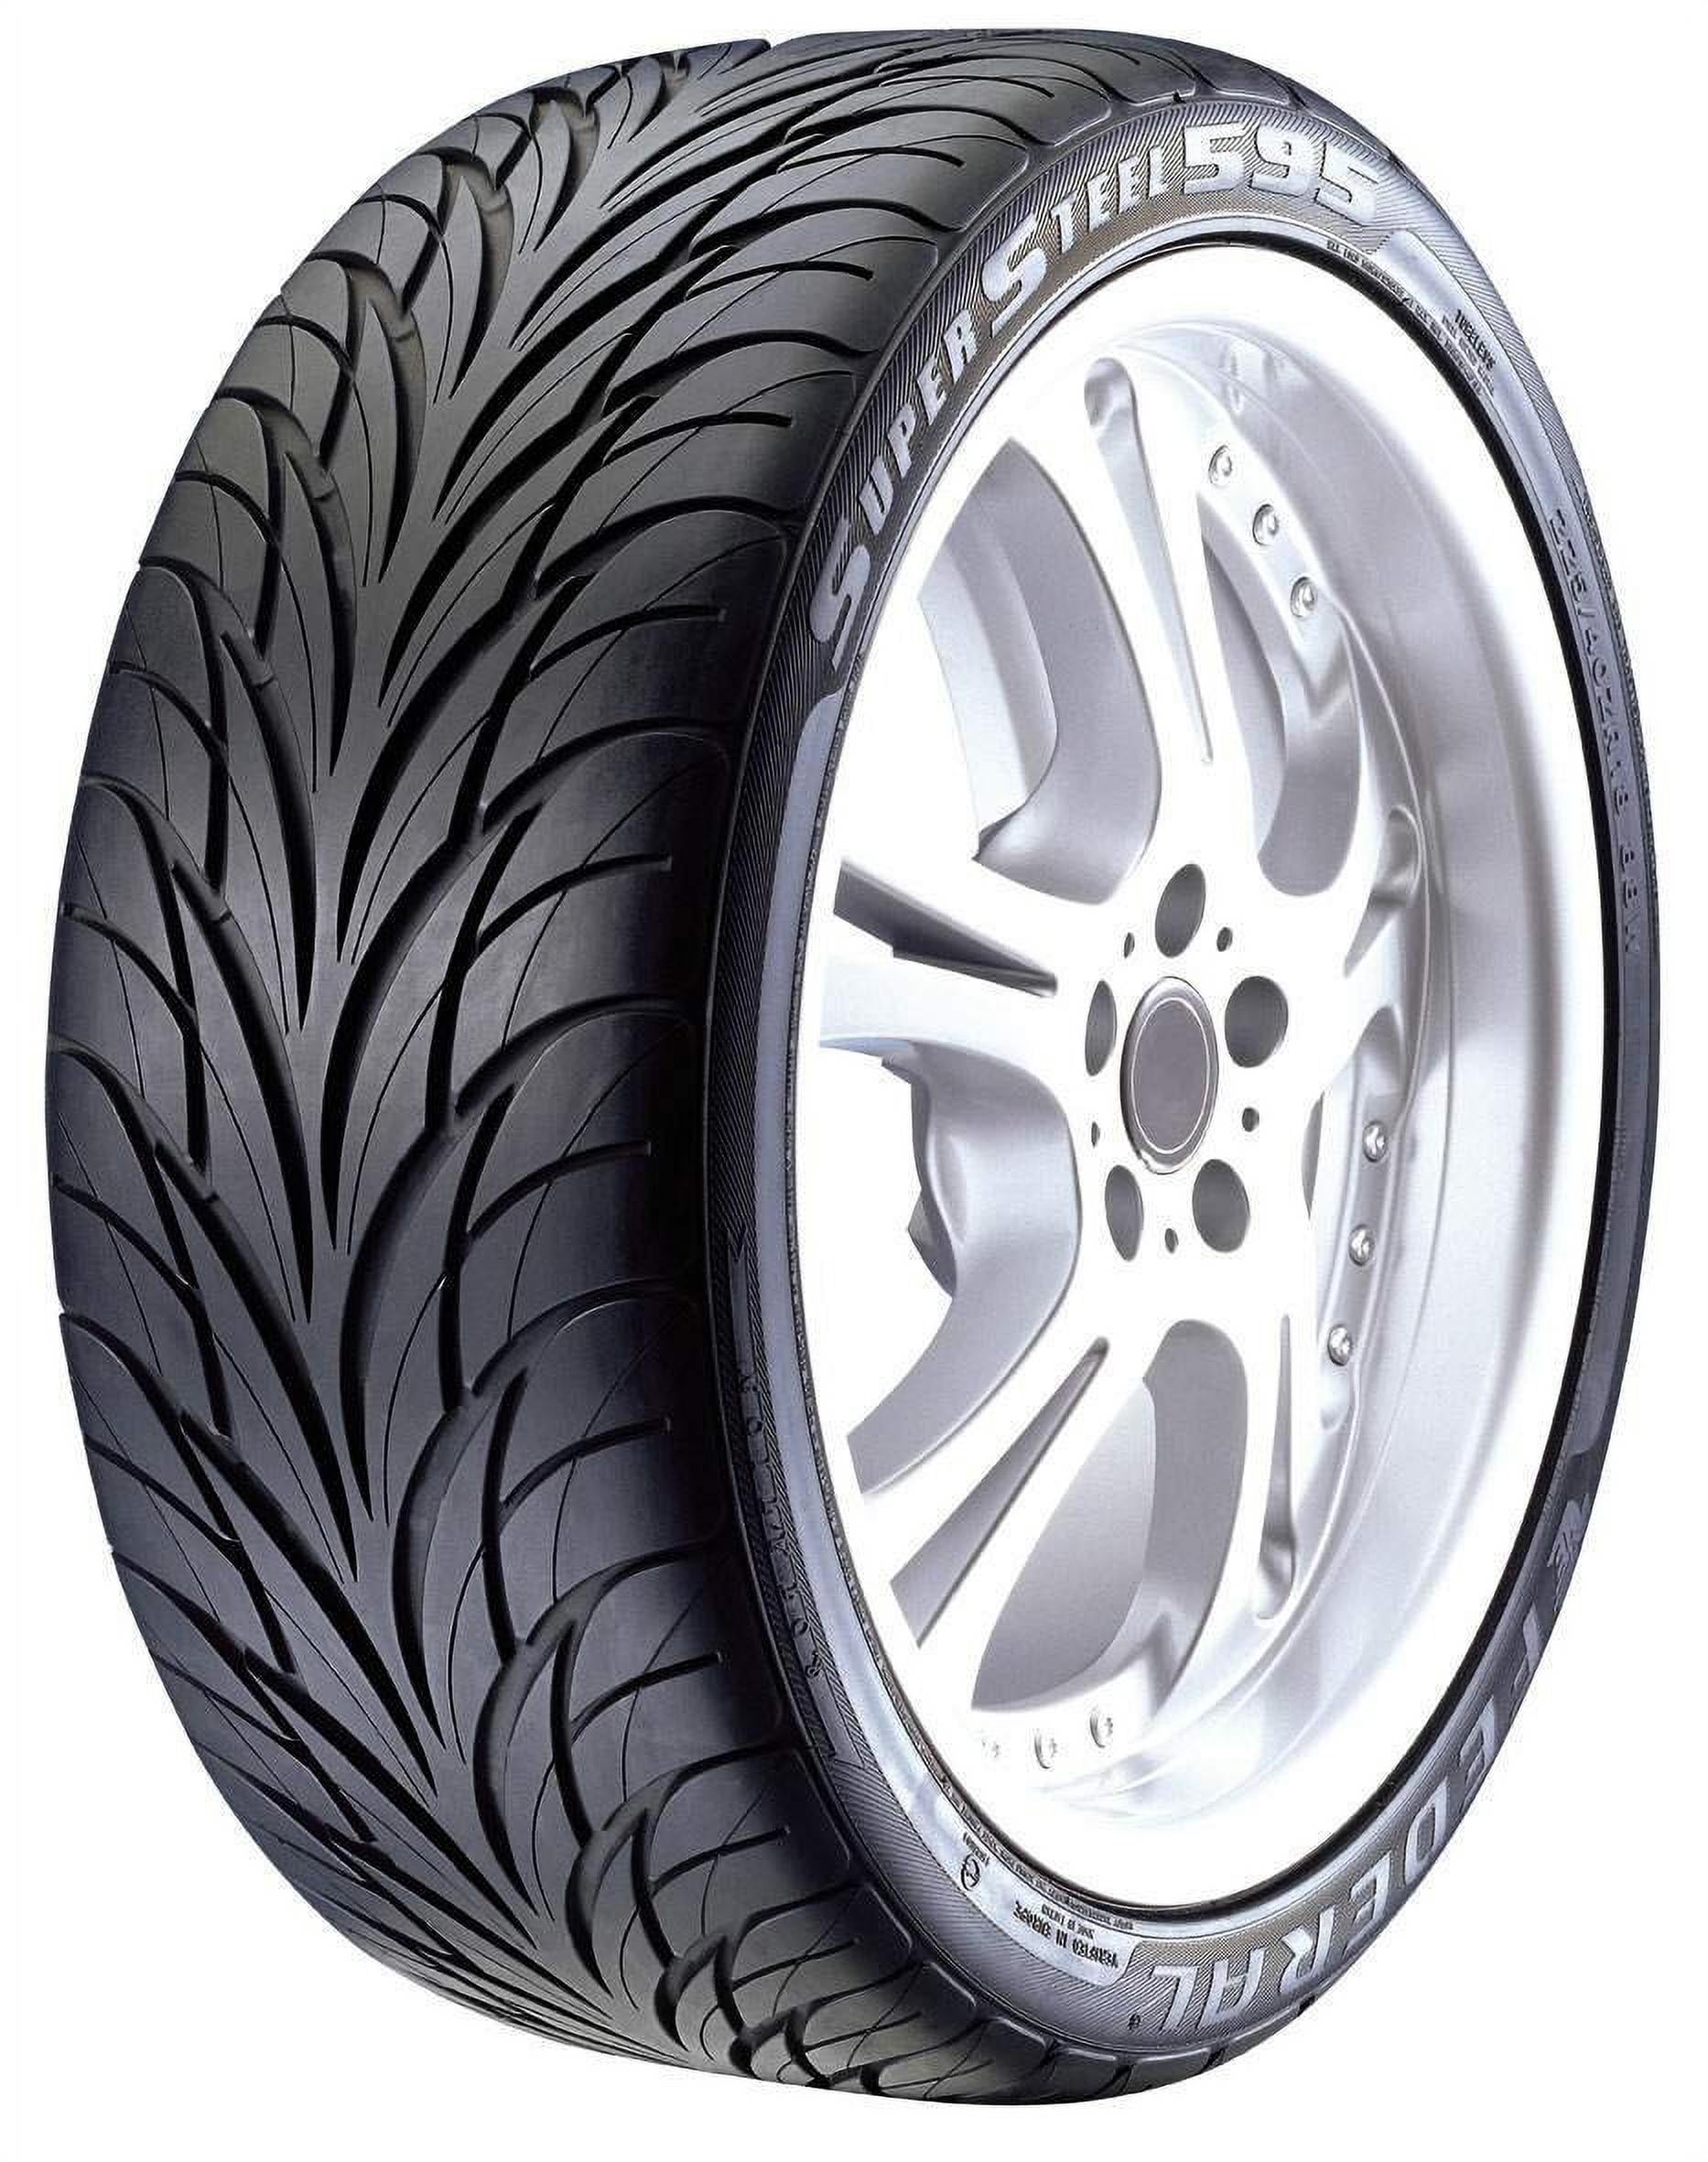 Federal SS595 High Performance Tire - 215/35R18 84W. - Walmart.com